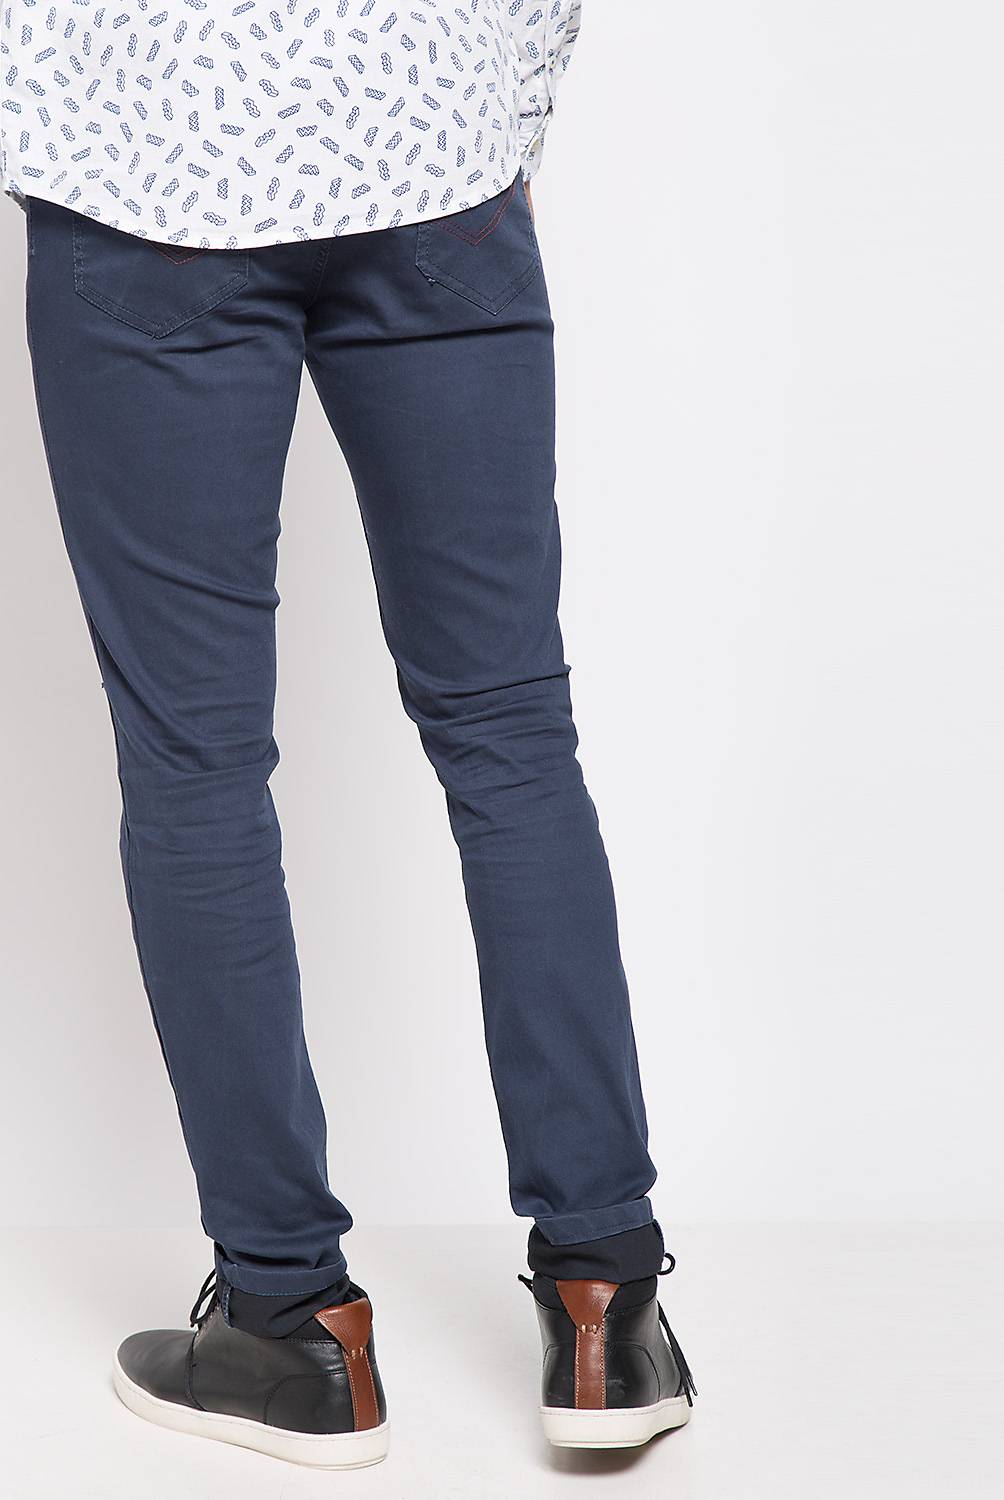 BEARCLIFF - Jeans Moda JDSK Color S18